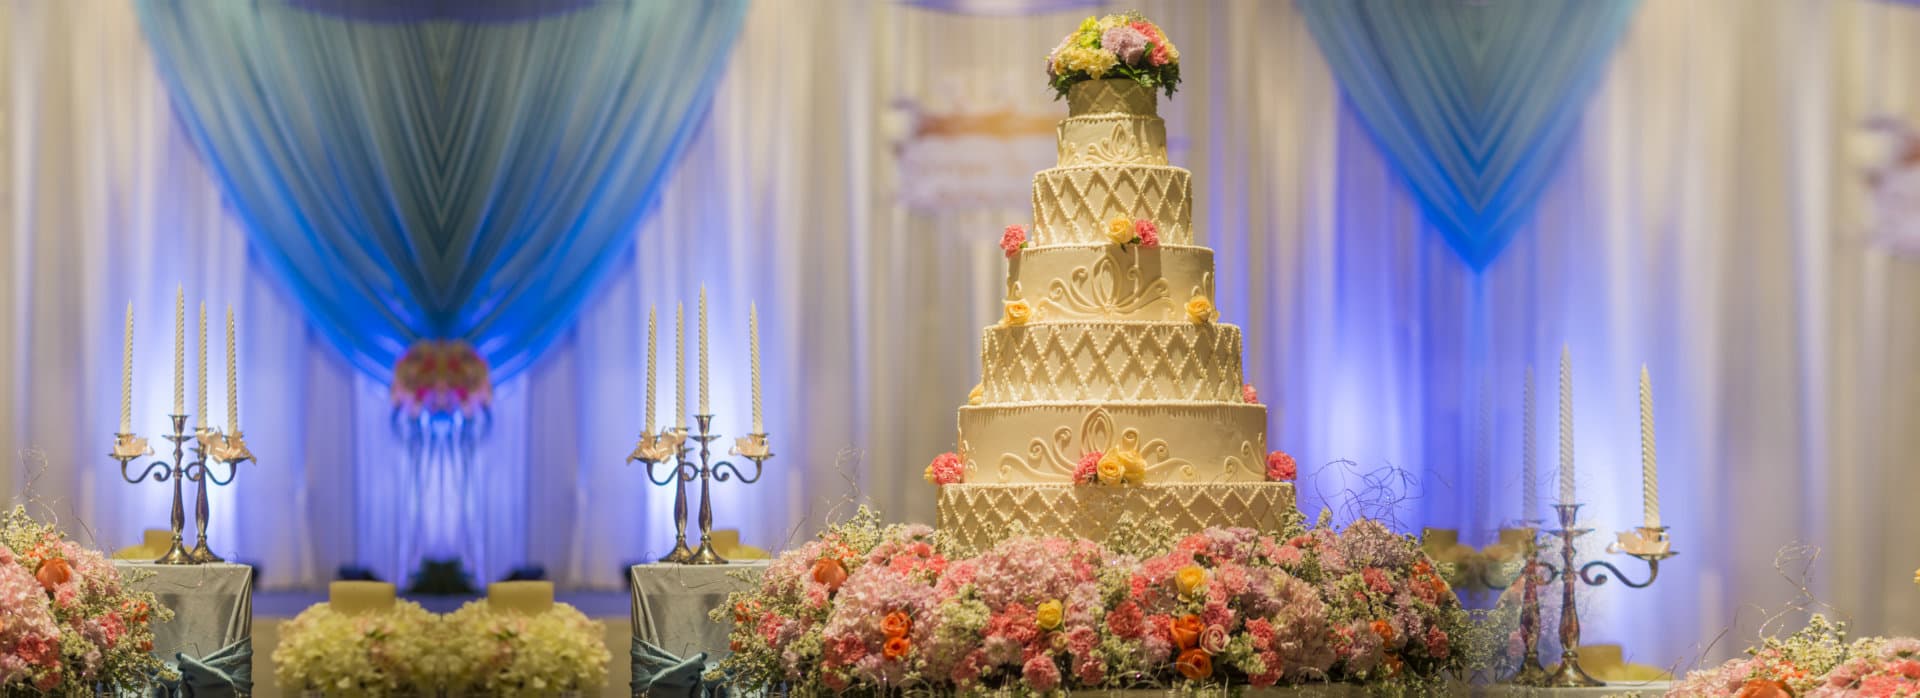 a big wedding cake